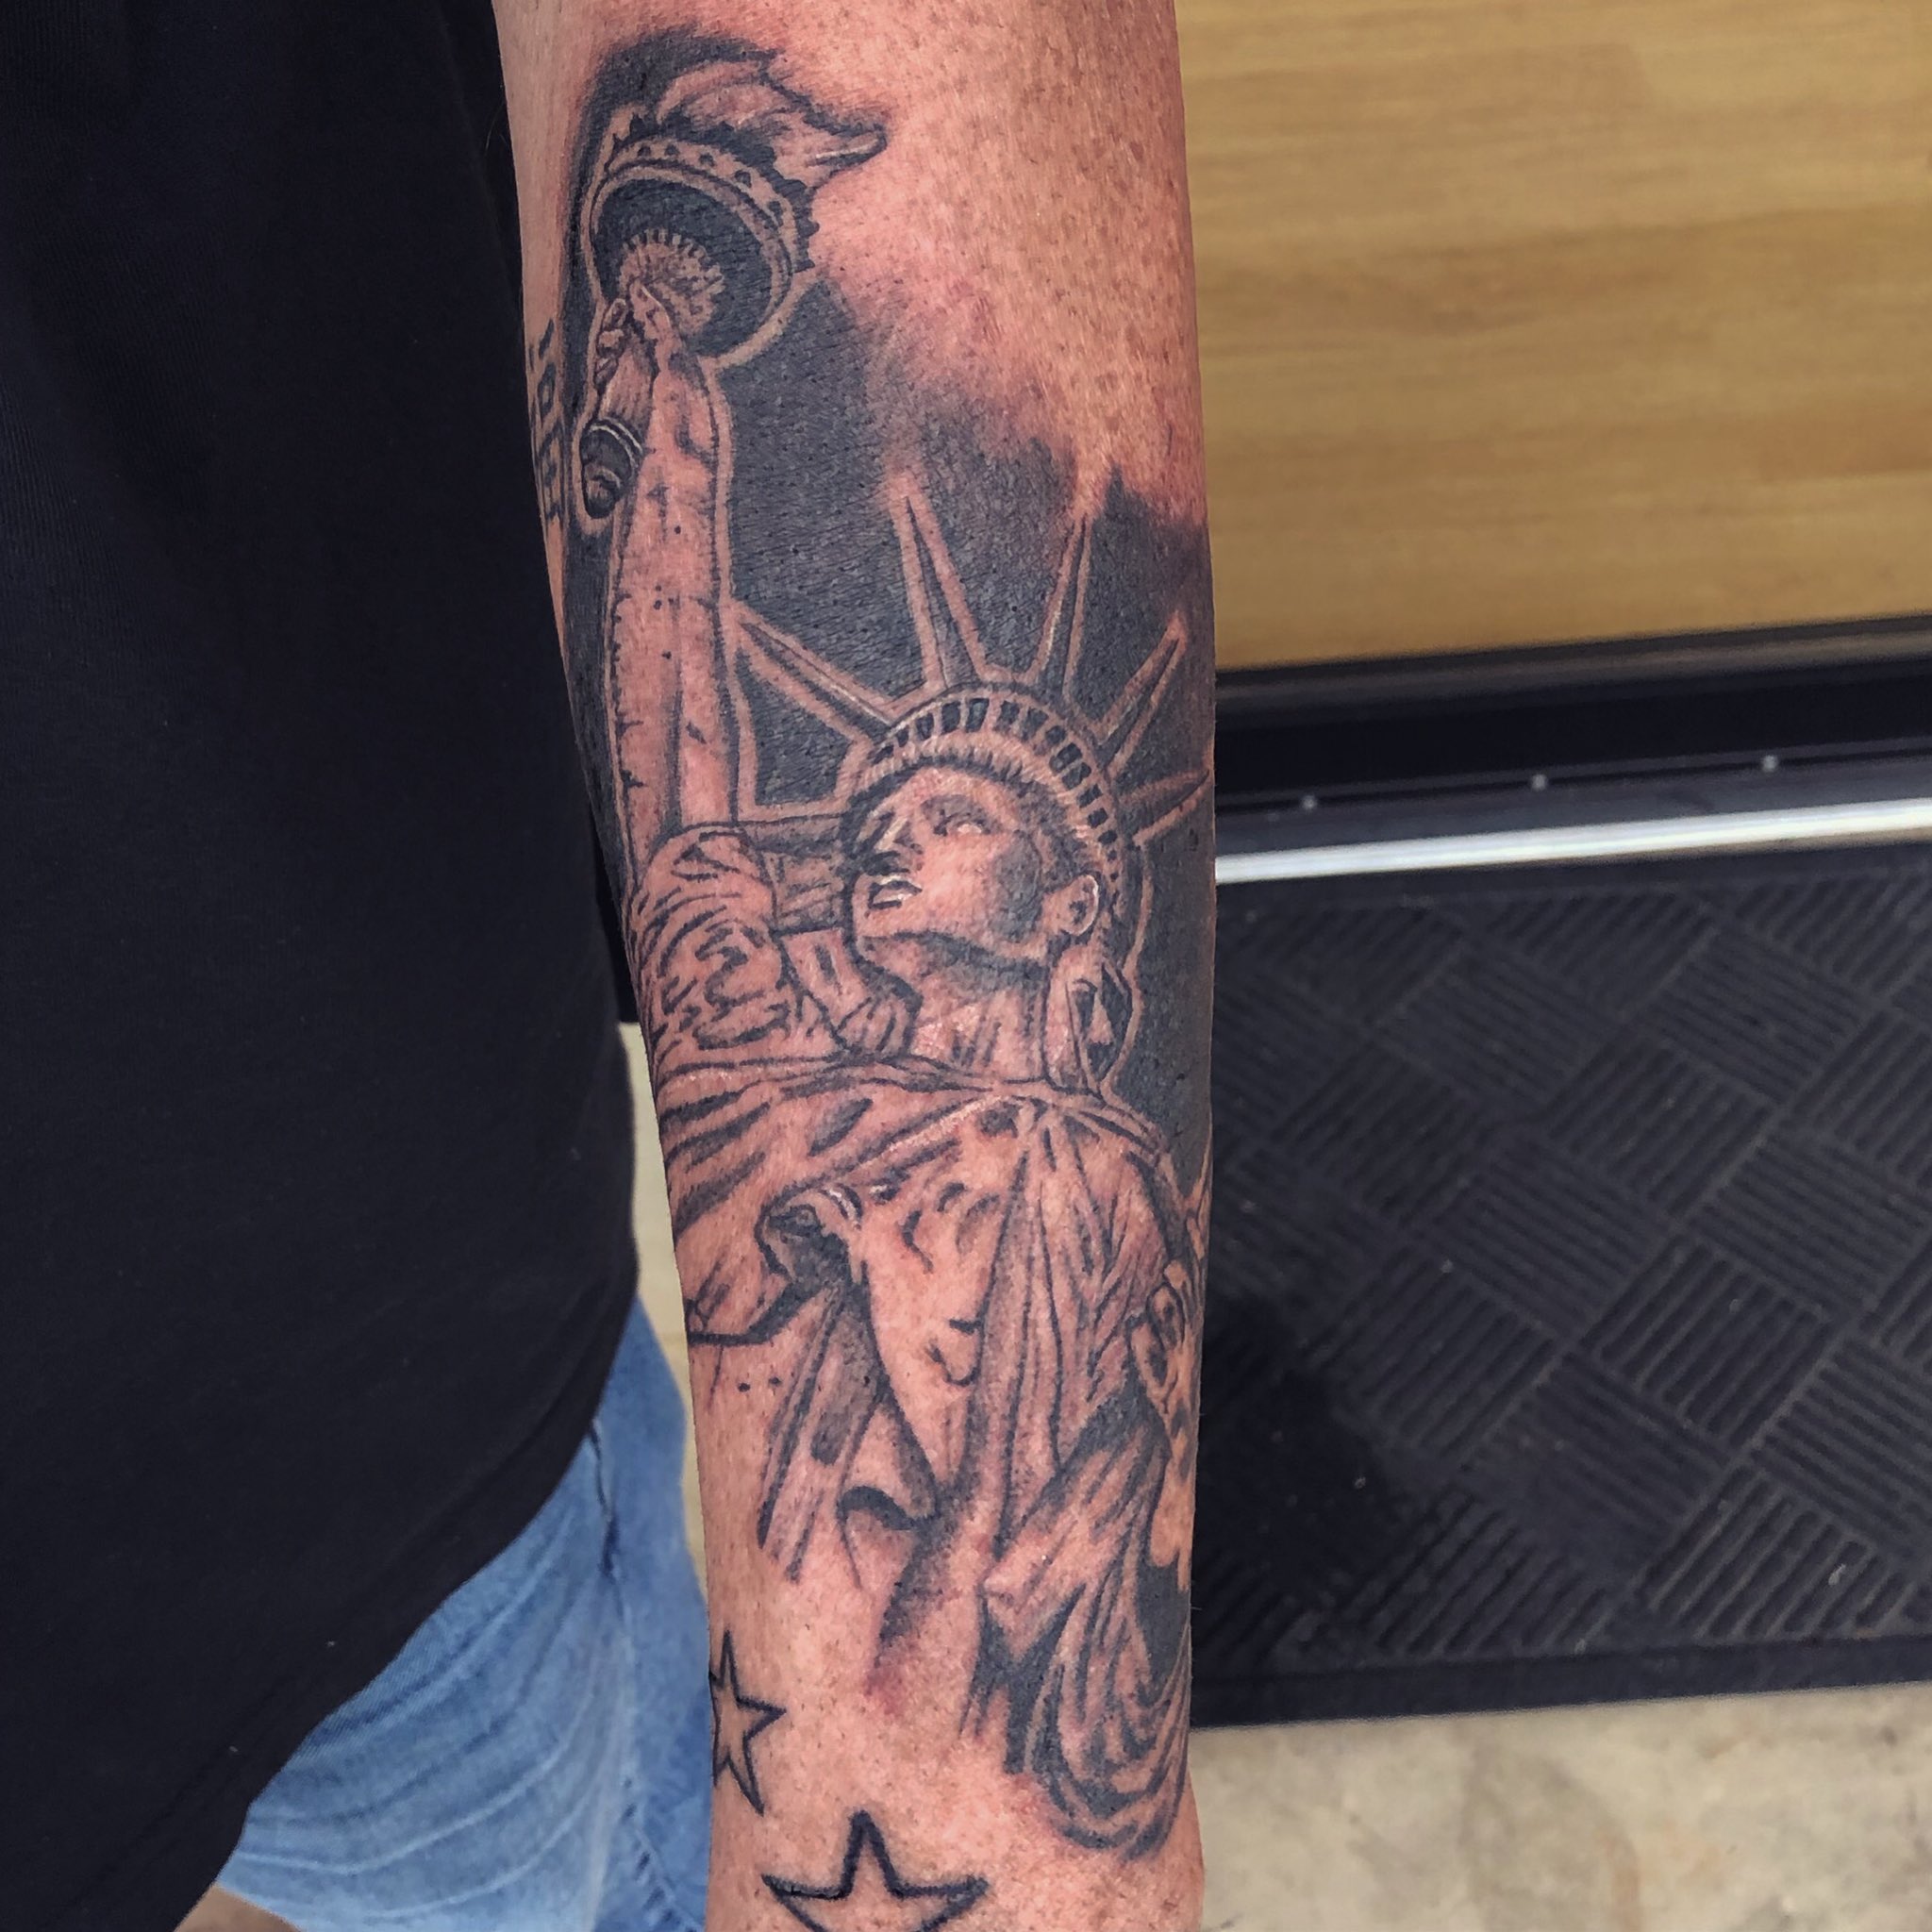 A fan gets a tattoo of Priyanka Chopra as the Statue of Liberty